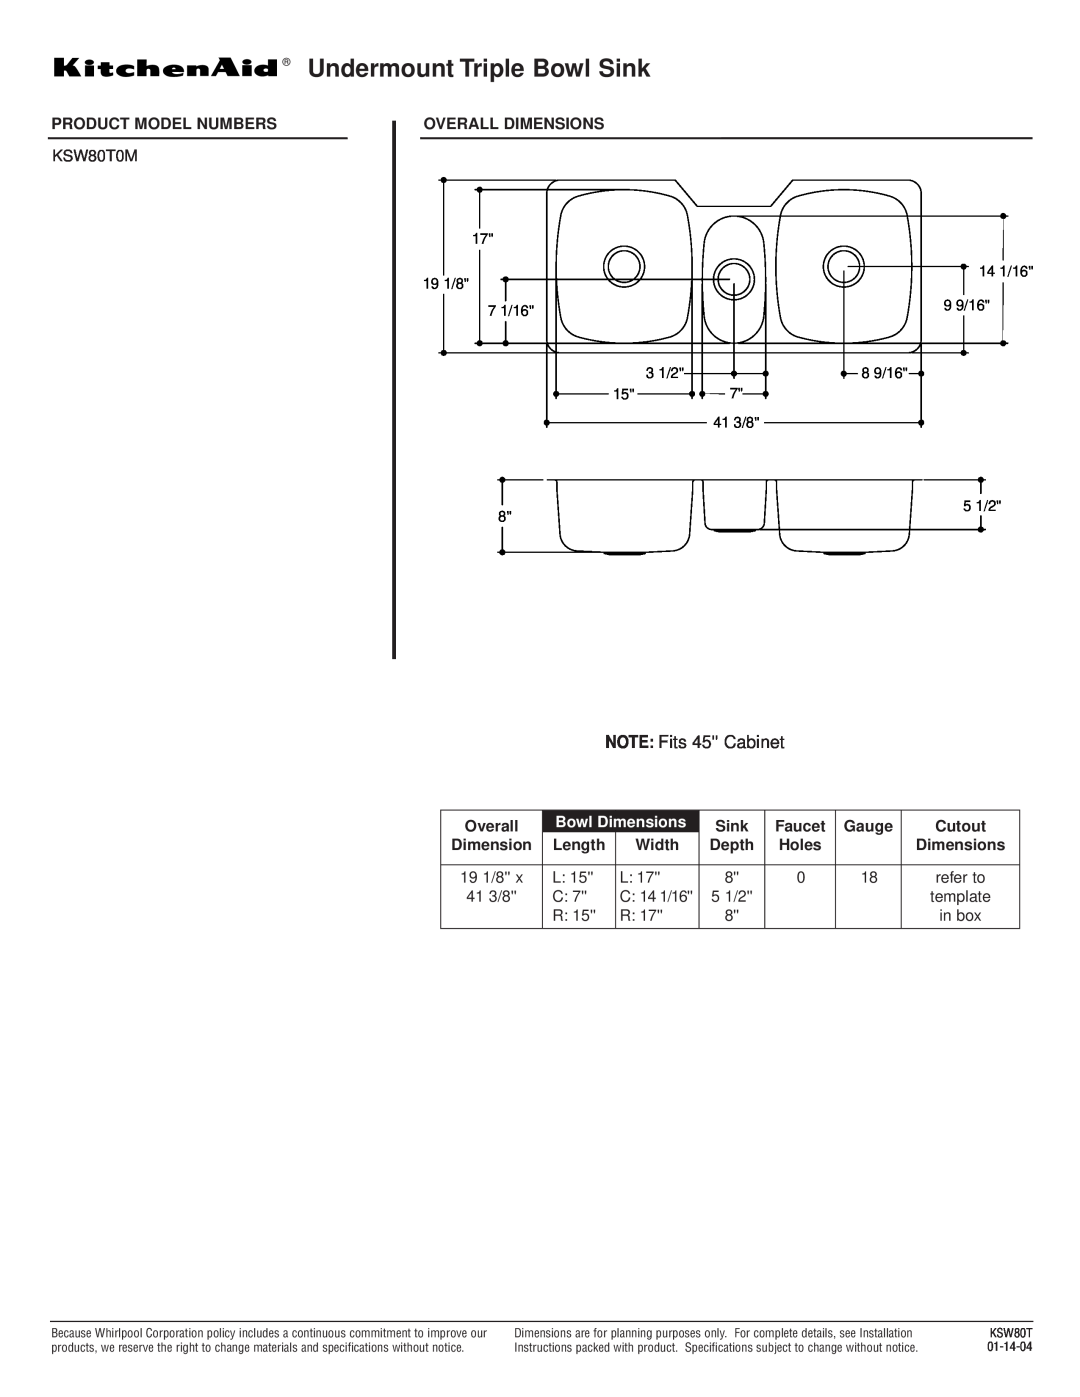 KitchenAid KSW80T0M dimensions Undermount Triple Bowl Sink, NOTE Fits 45 Cabinet, Bowl Dimensions 